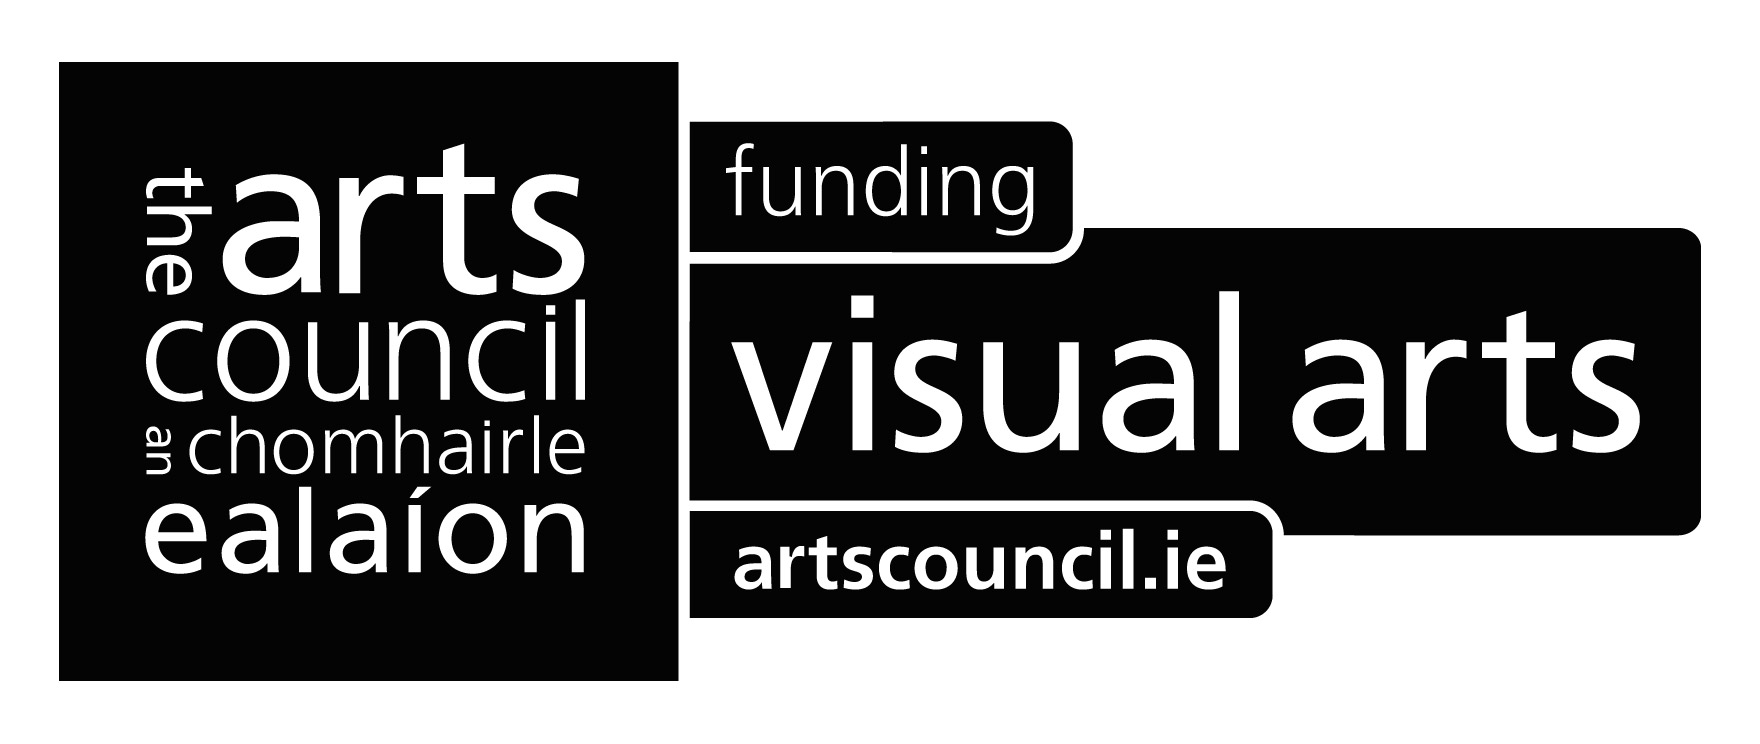 Arts Council of Ireland_logo.jpg